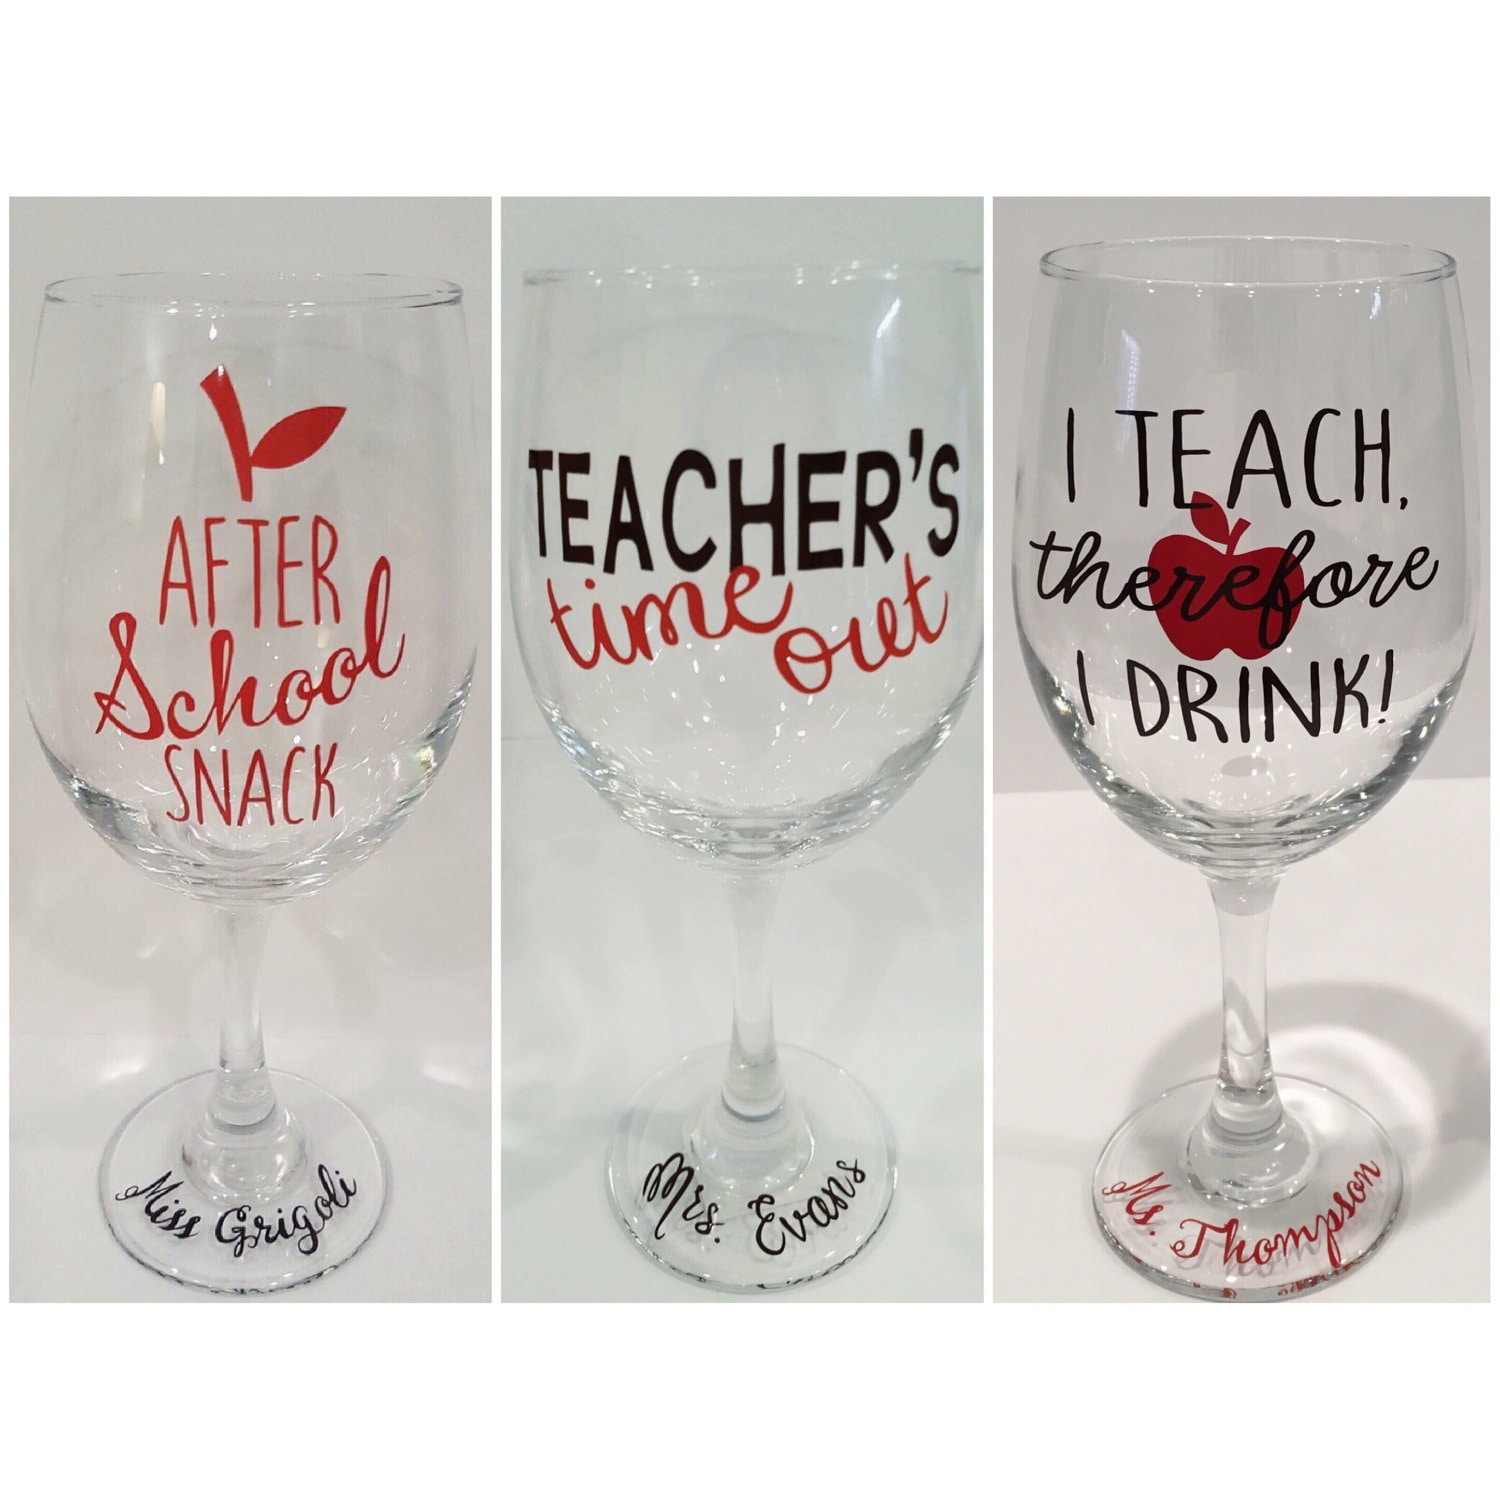 Download Funny Teacher Wine Glasses After school snack Teacher's